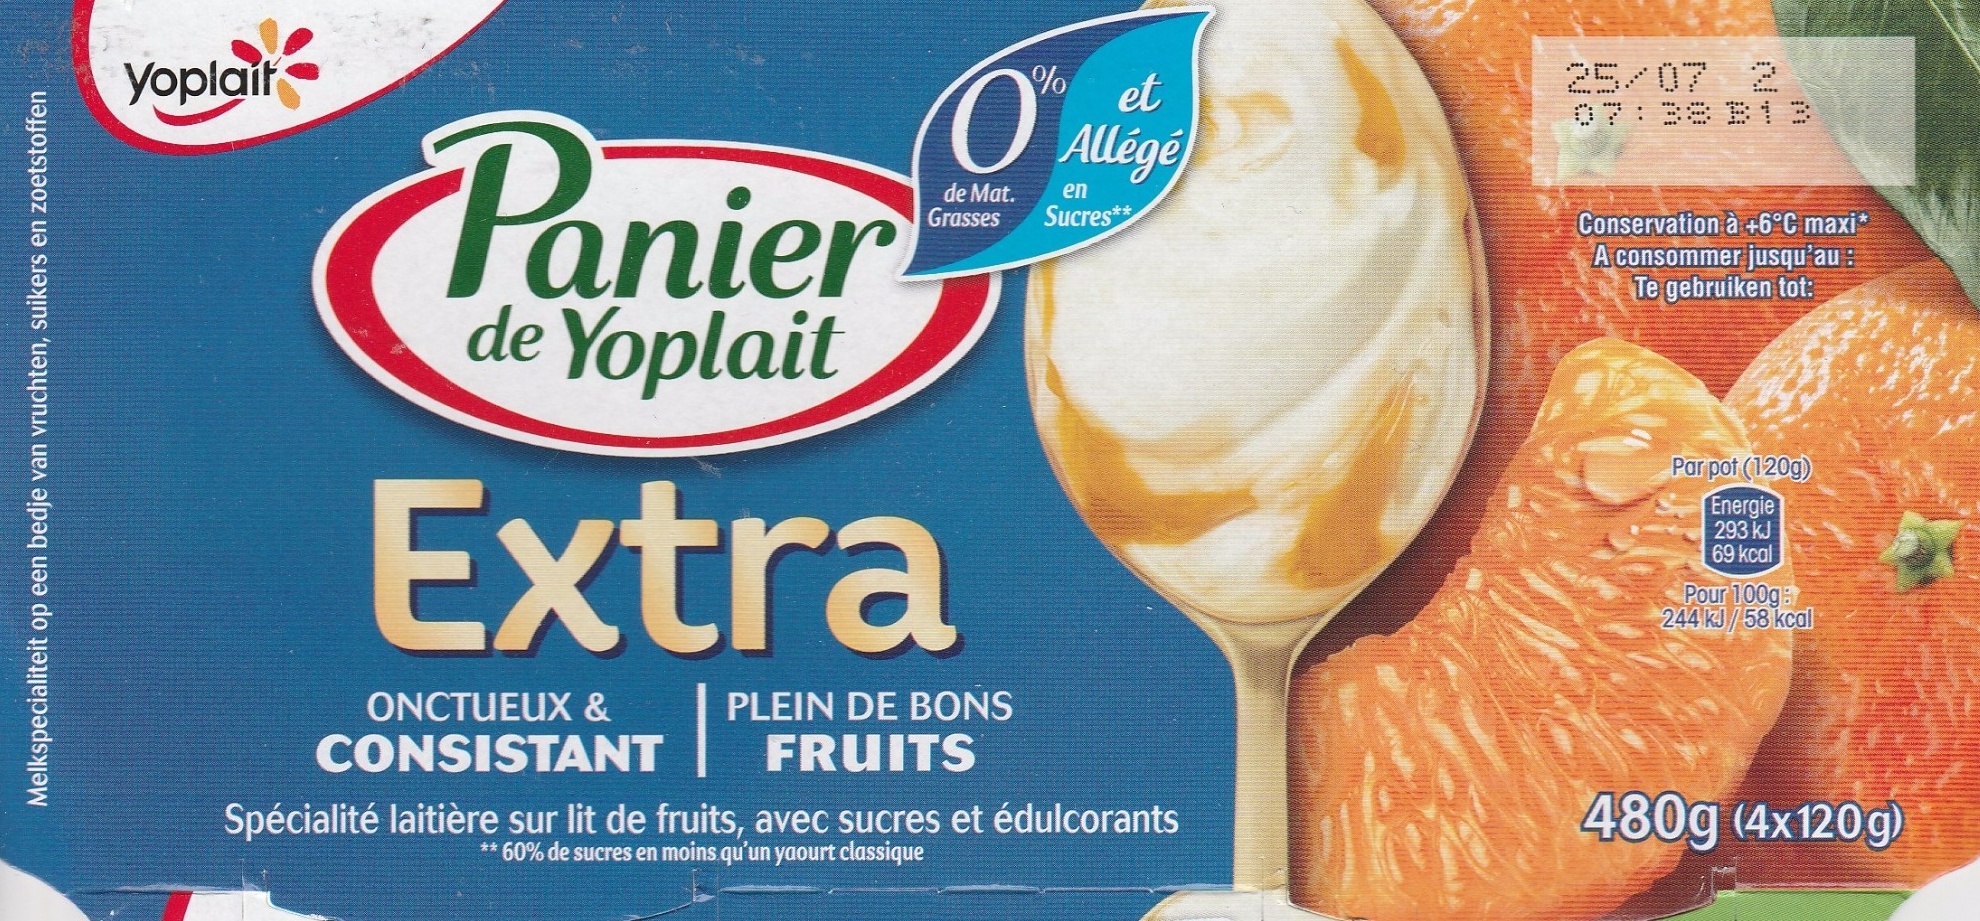 Panier de Yoplait Extra Mandarine - Produit